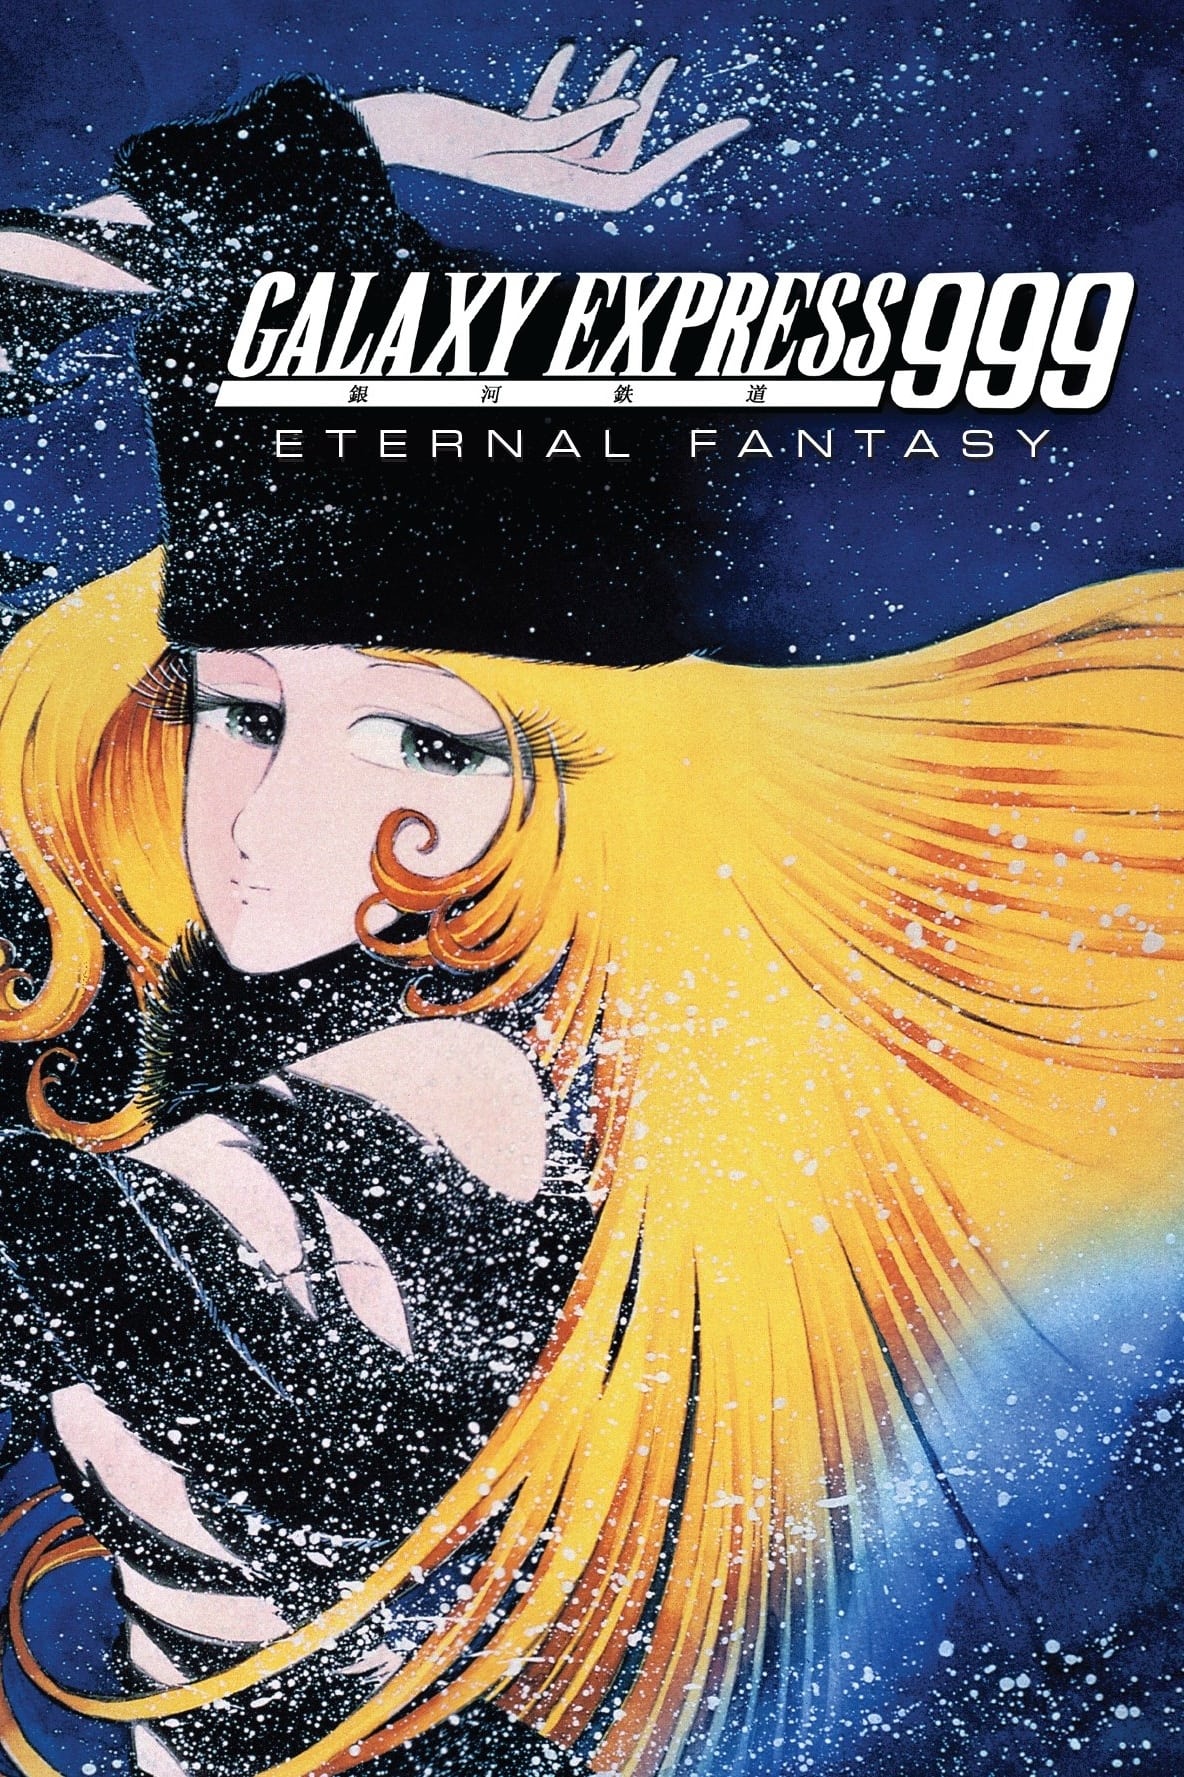 Galaxy Express 999 - Eternal Fantasy (1998)